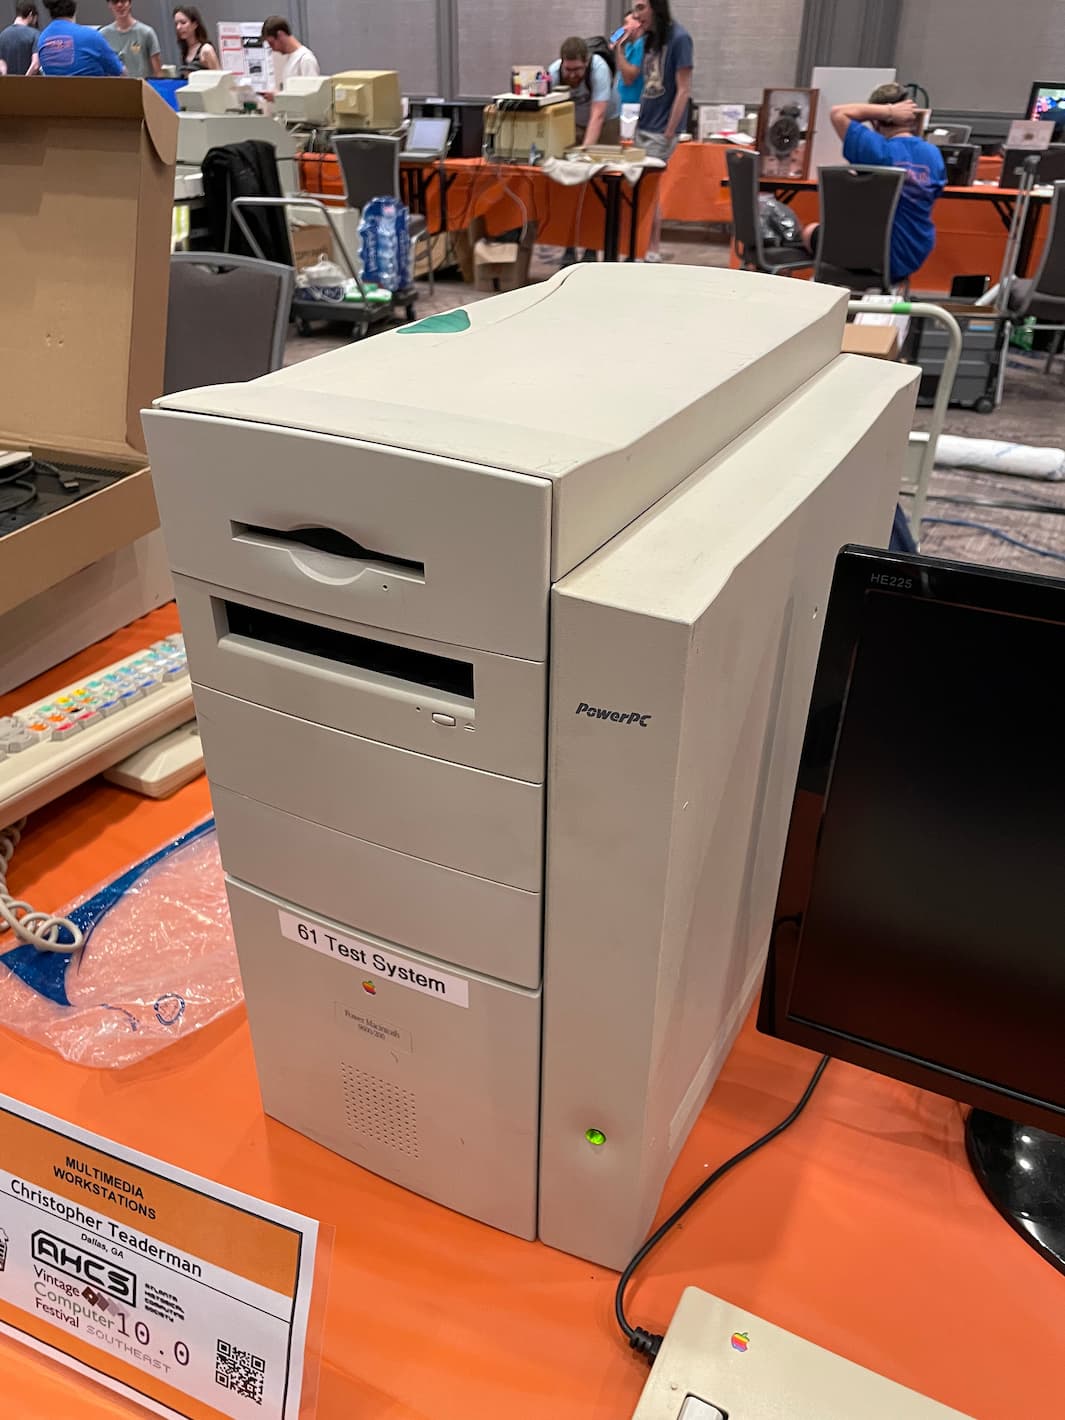 A Power Macintosh 9600.